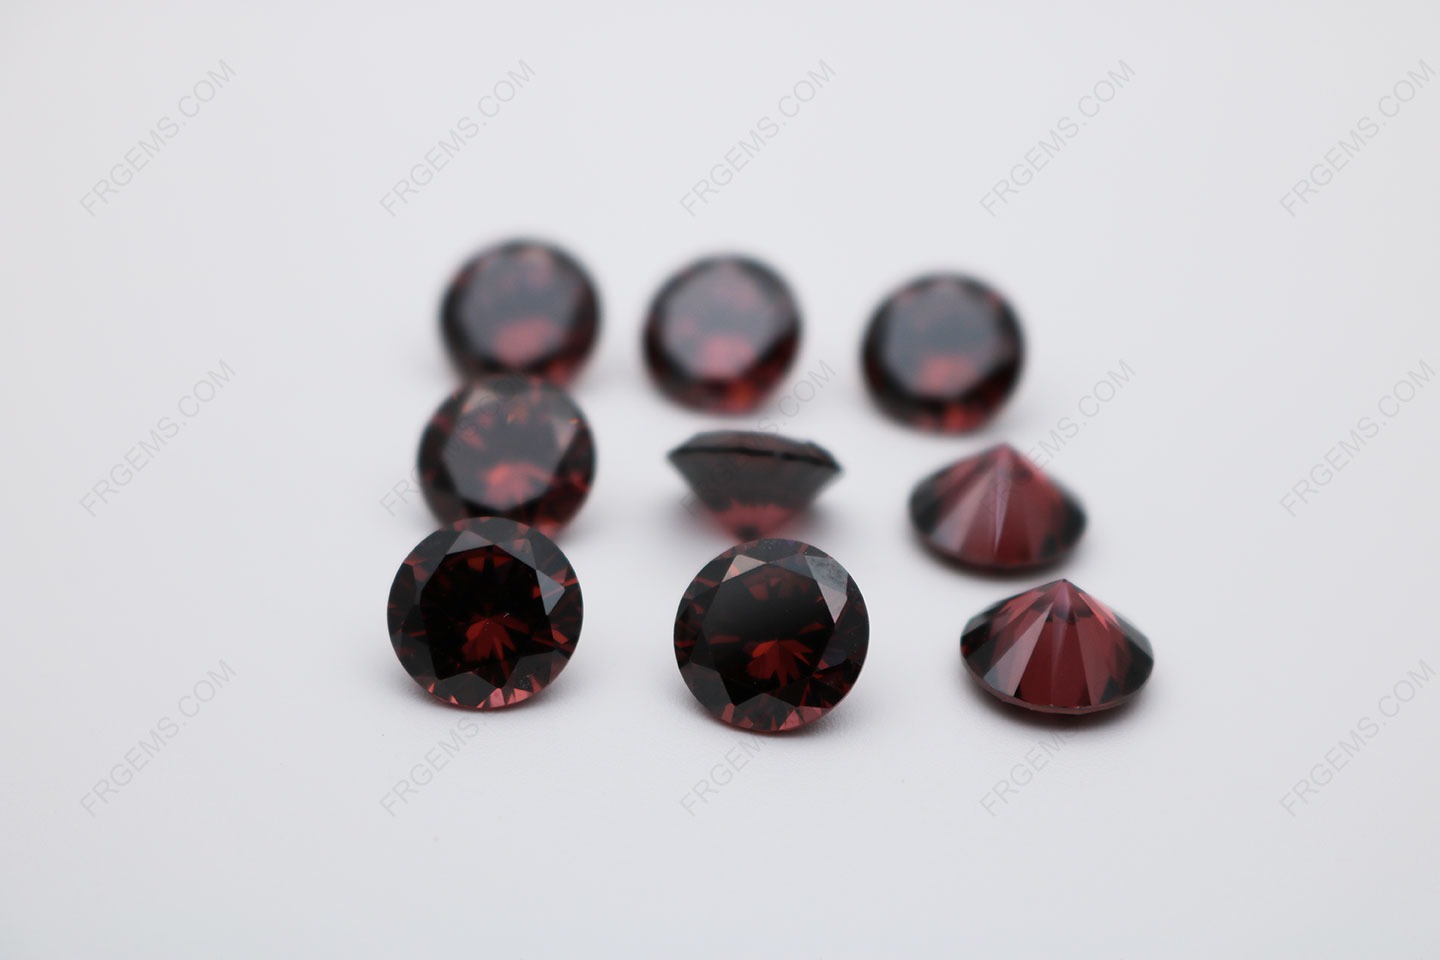 Cubic Zirconia Rhodolite Round Shape Diamond Faceted Cut 10mm stones CZ30 IMG_0203